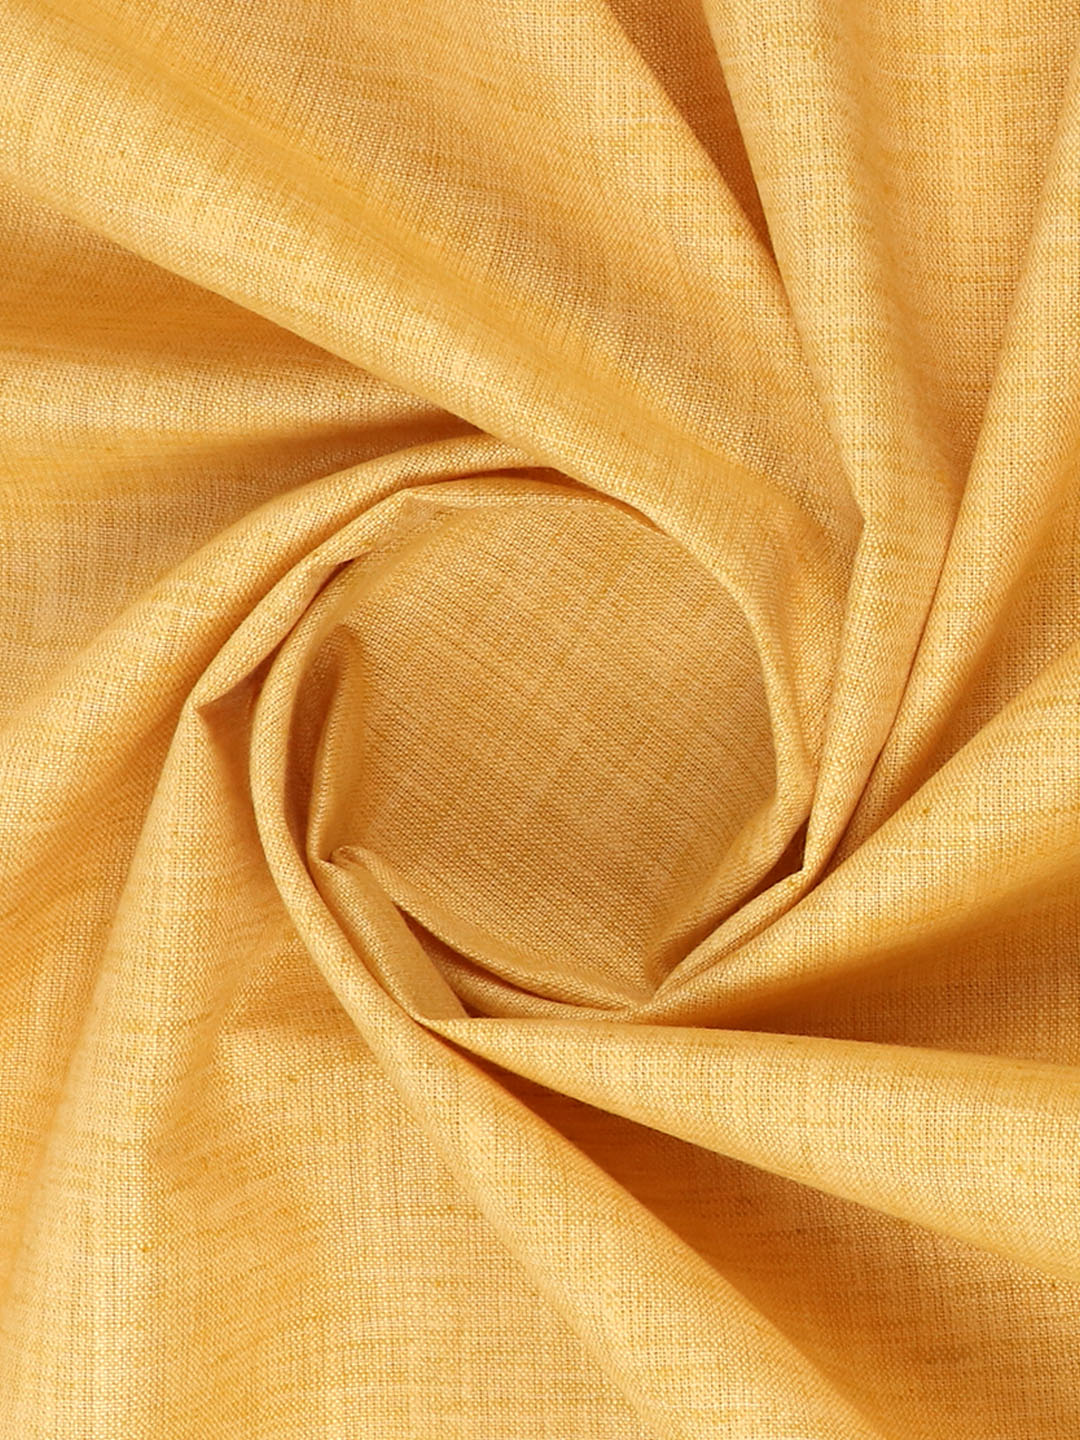 Cotton Blend Mustard Yellow Colour Kurtha Fabric Lampus